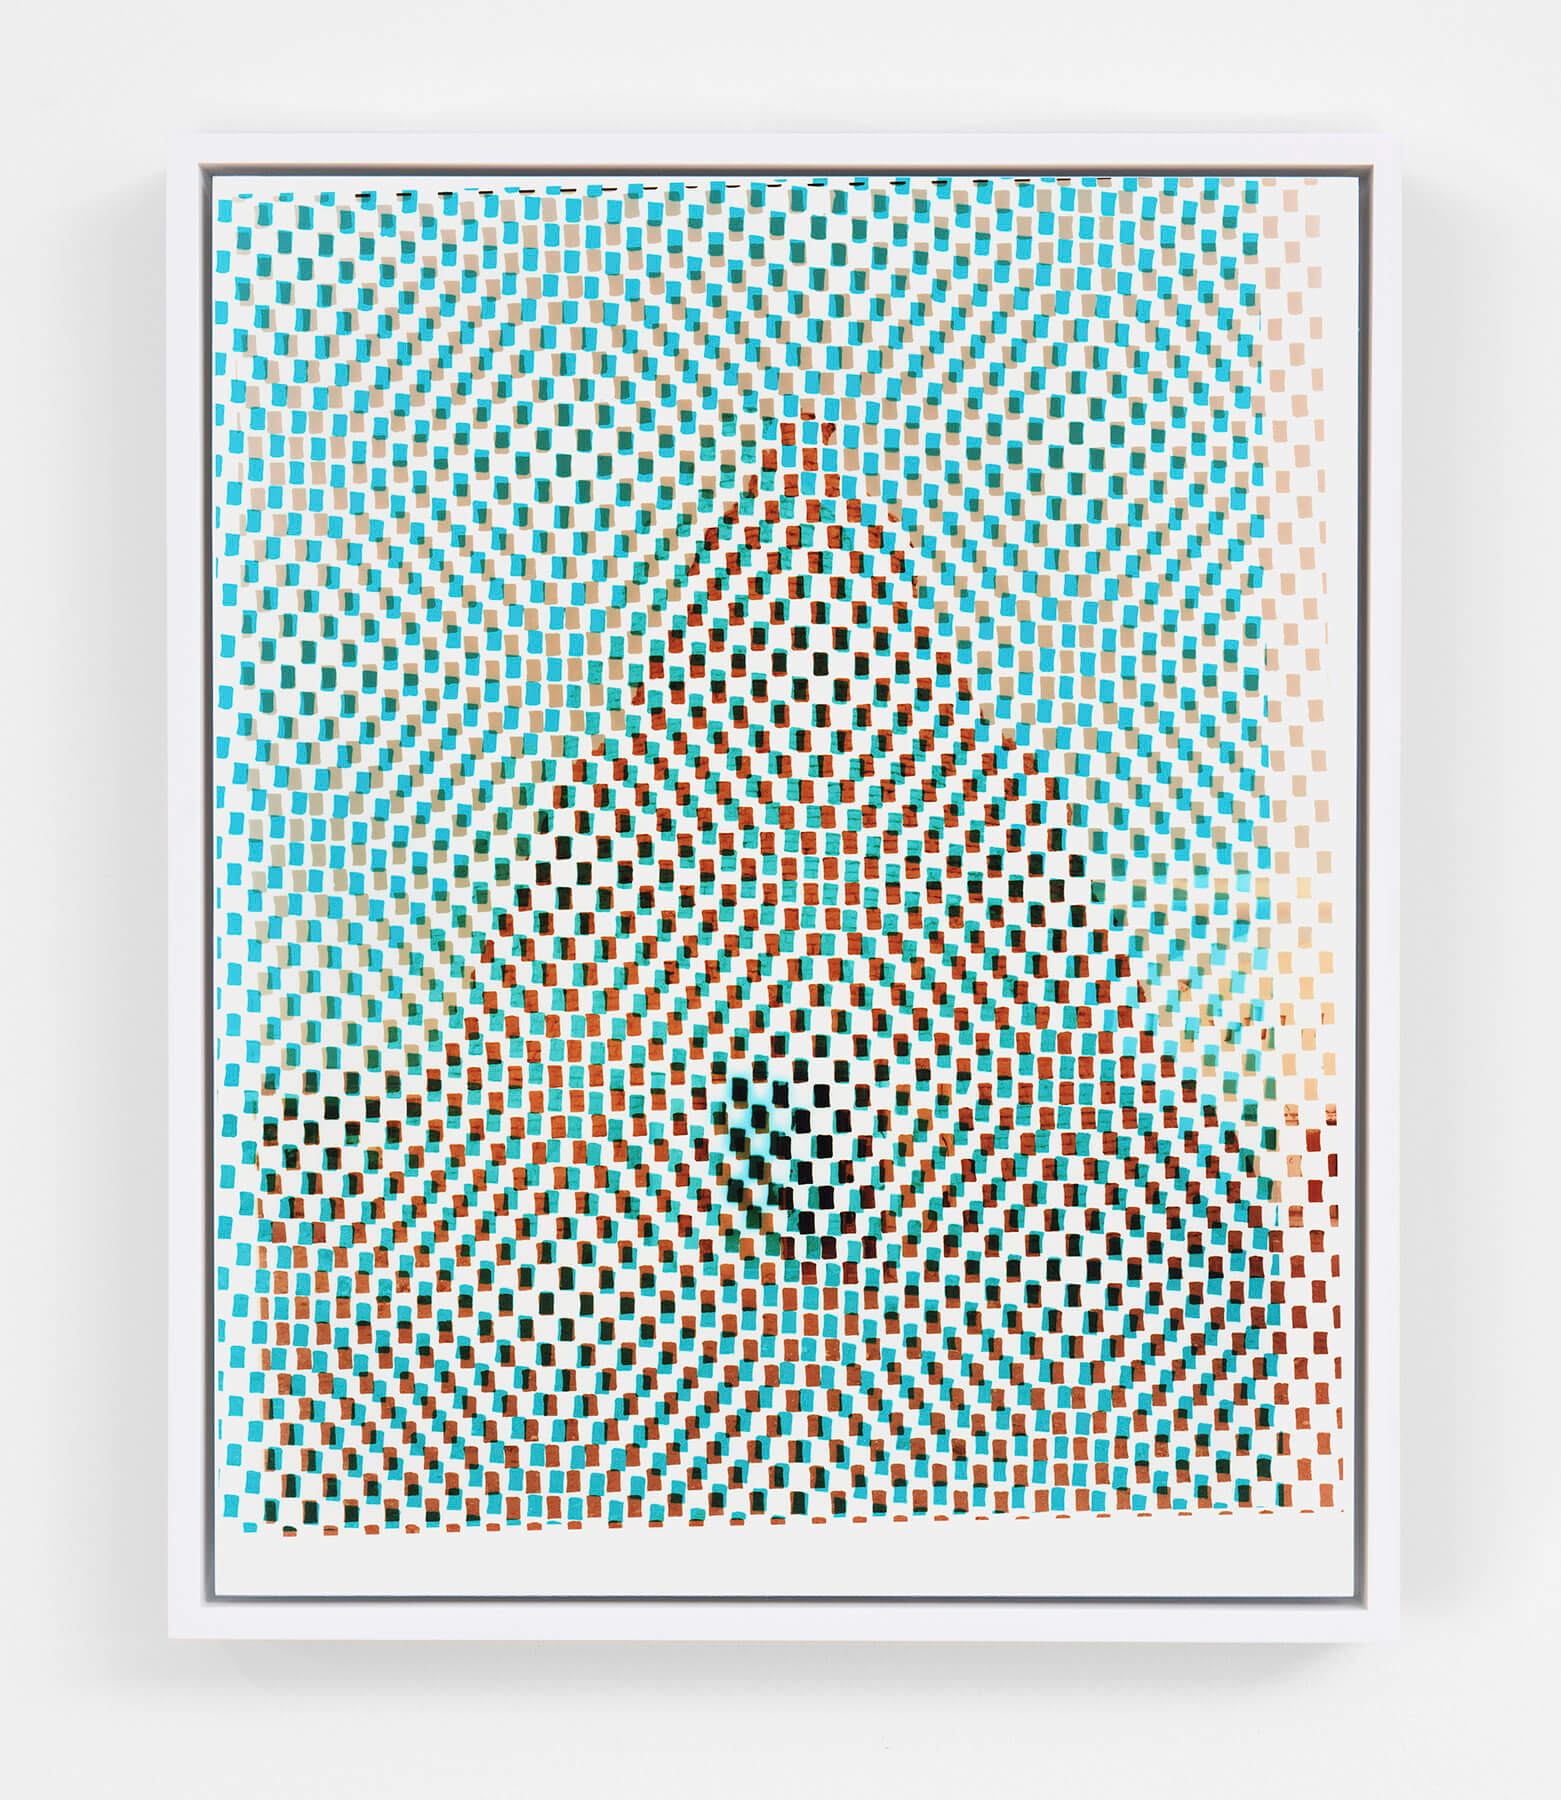 Livia Corona Benjamin
                                        'Infinite Rewrite IX', 2015
                                        10 1/2 x 8 1/2 Inches
                                        unique analog C-print
                                        